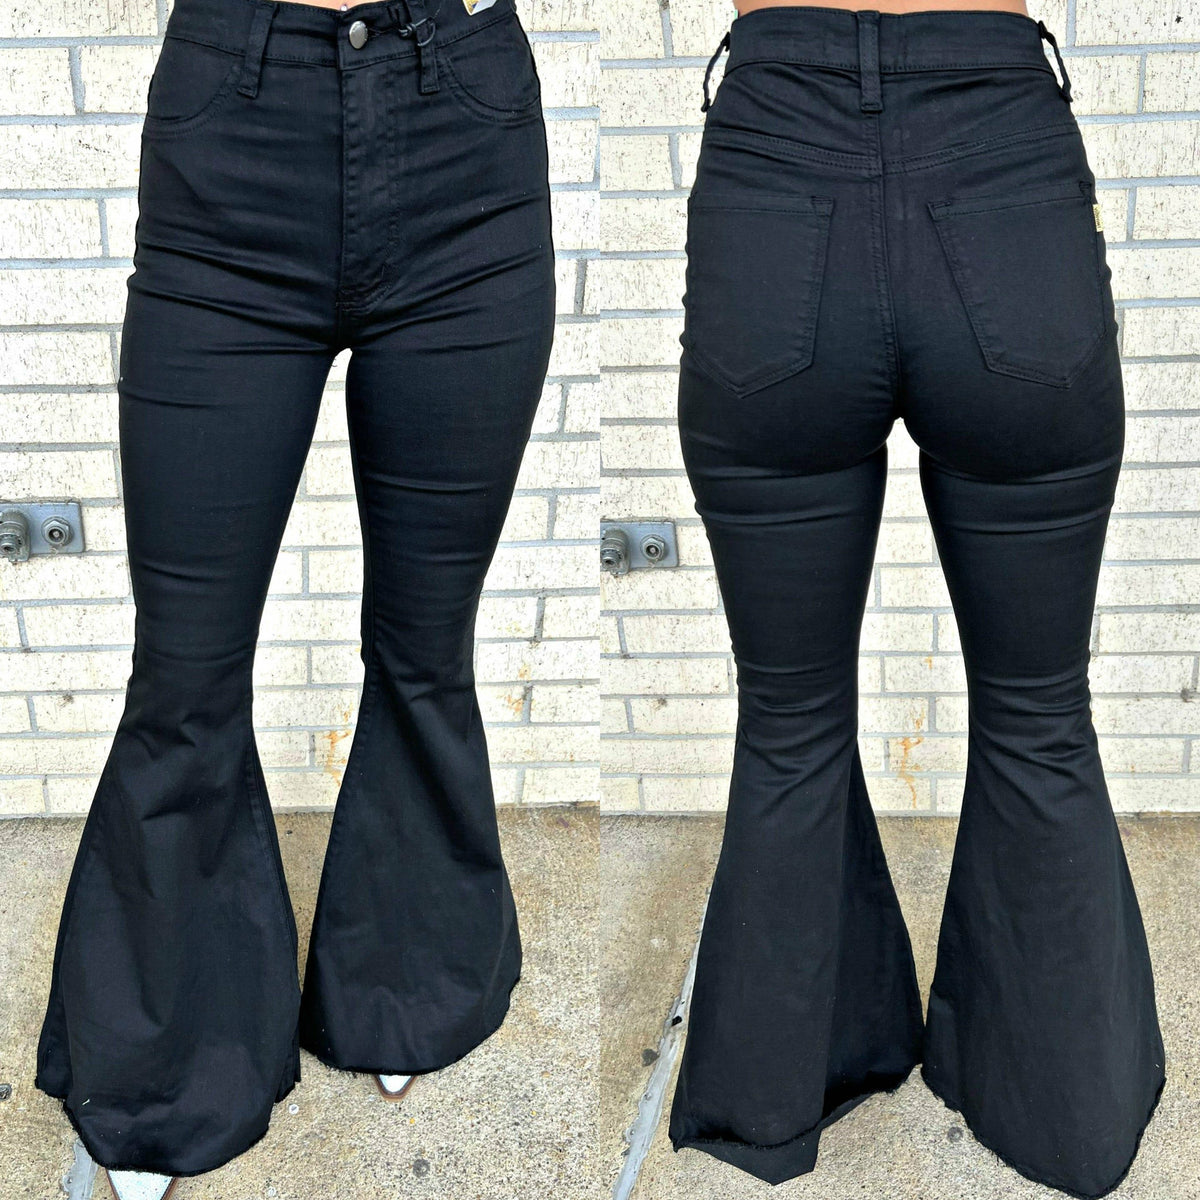 Make it Black Flare Jeans (no holes)